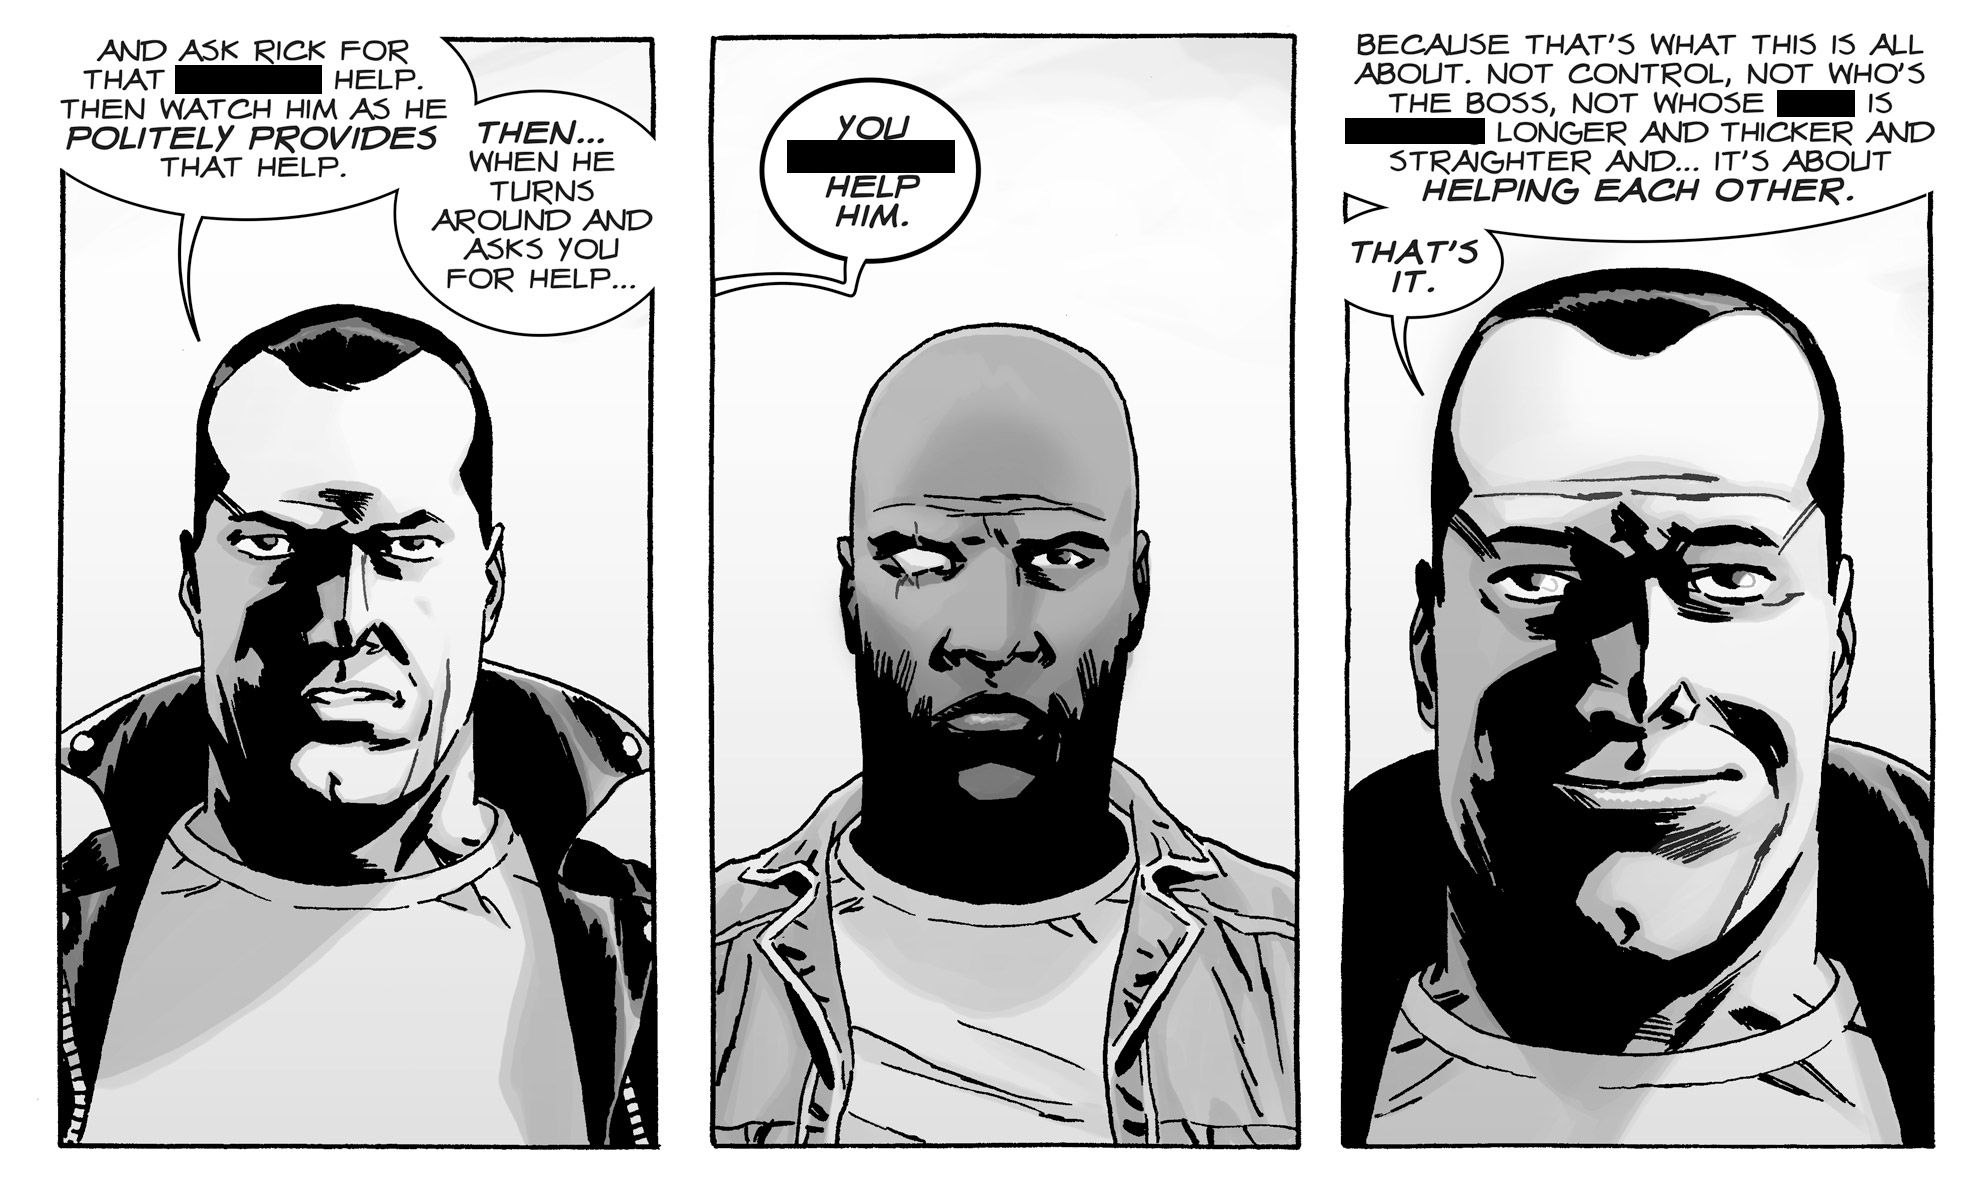 Negan convincing the Saviors to back down The Walking Dead comic panel